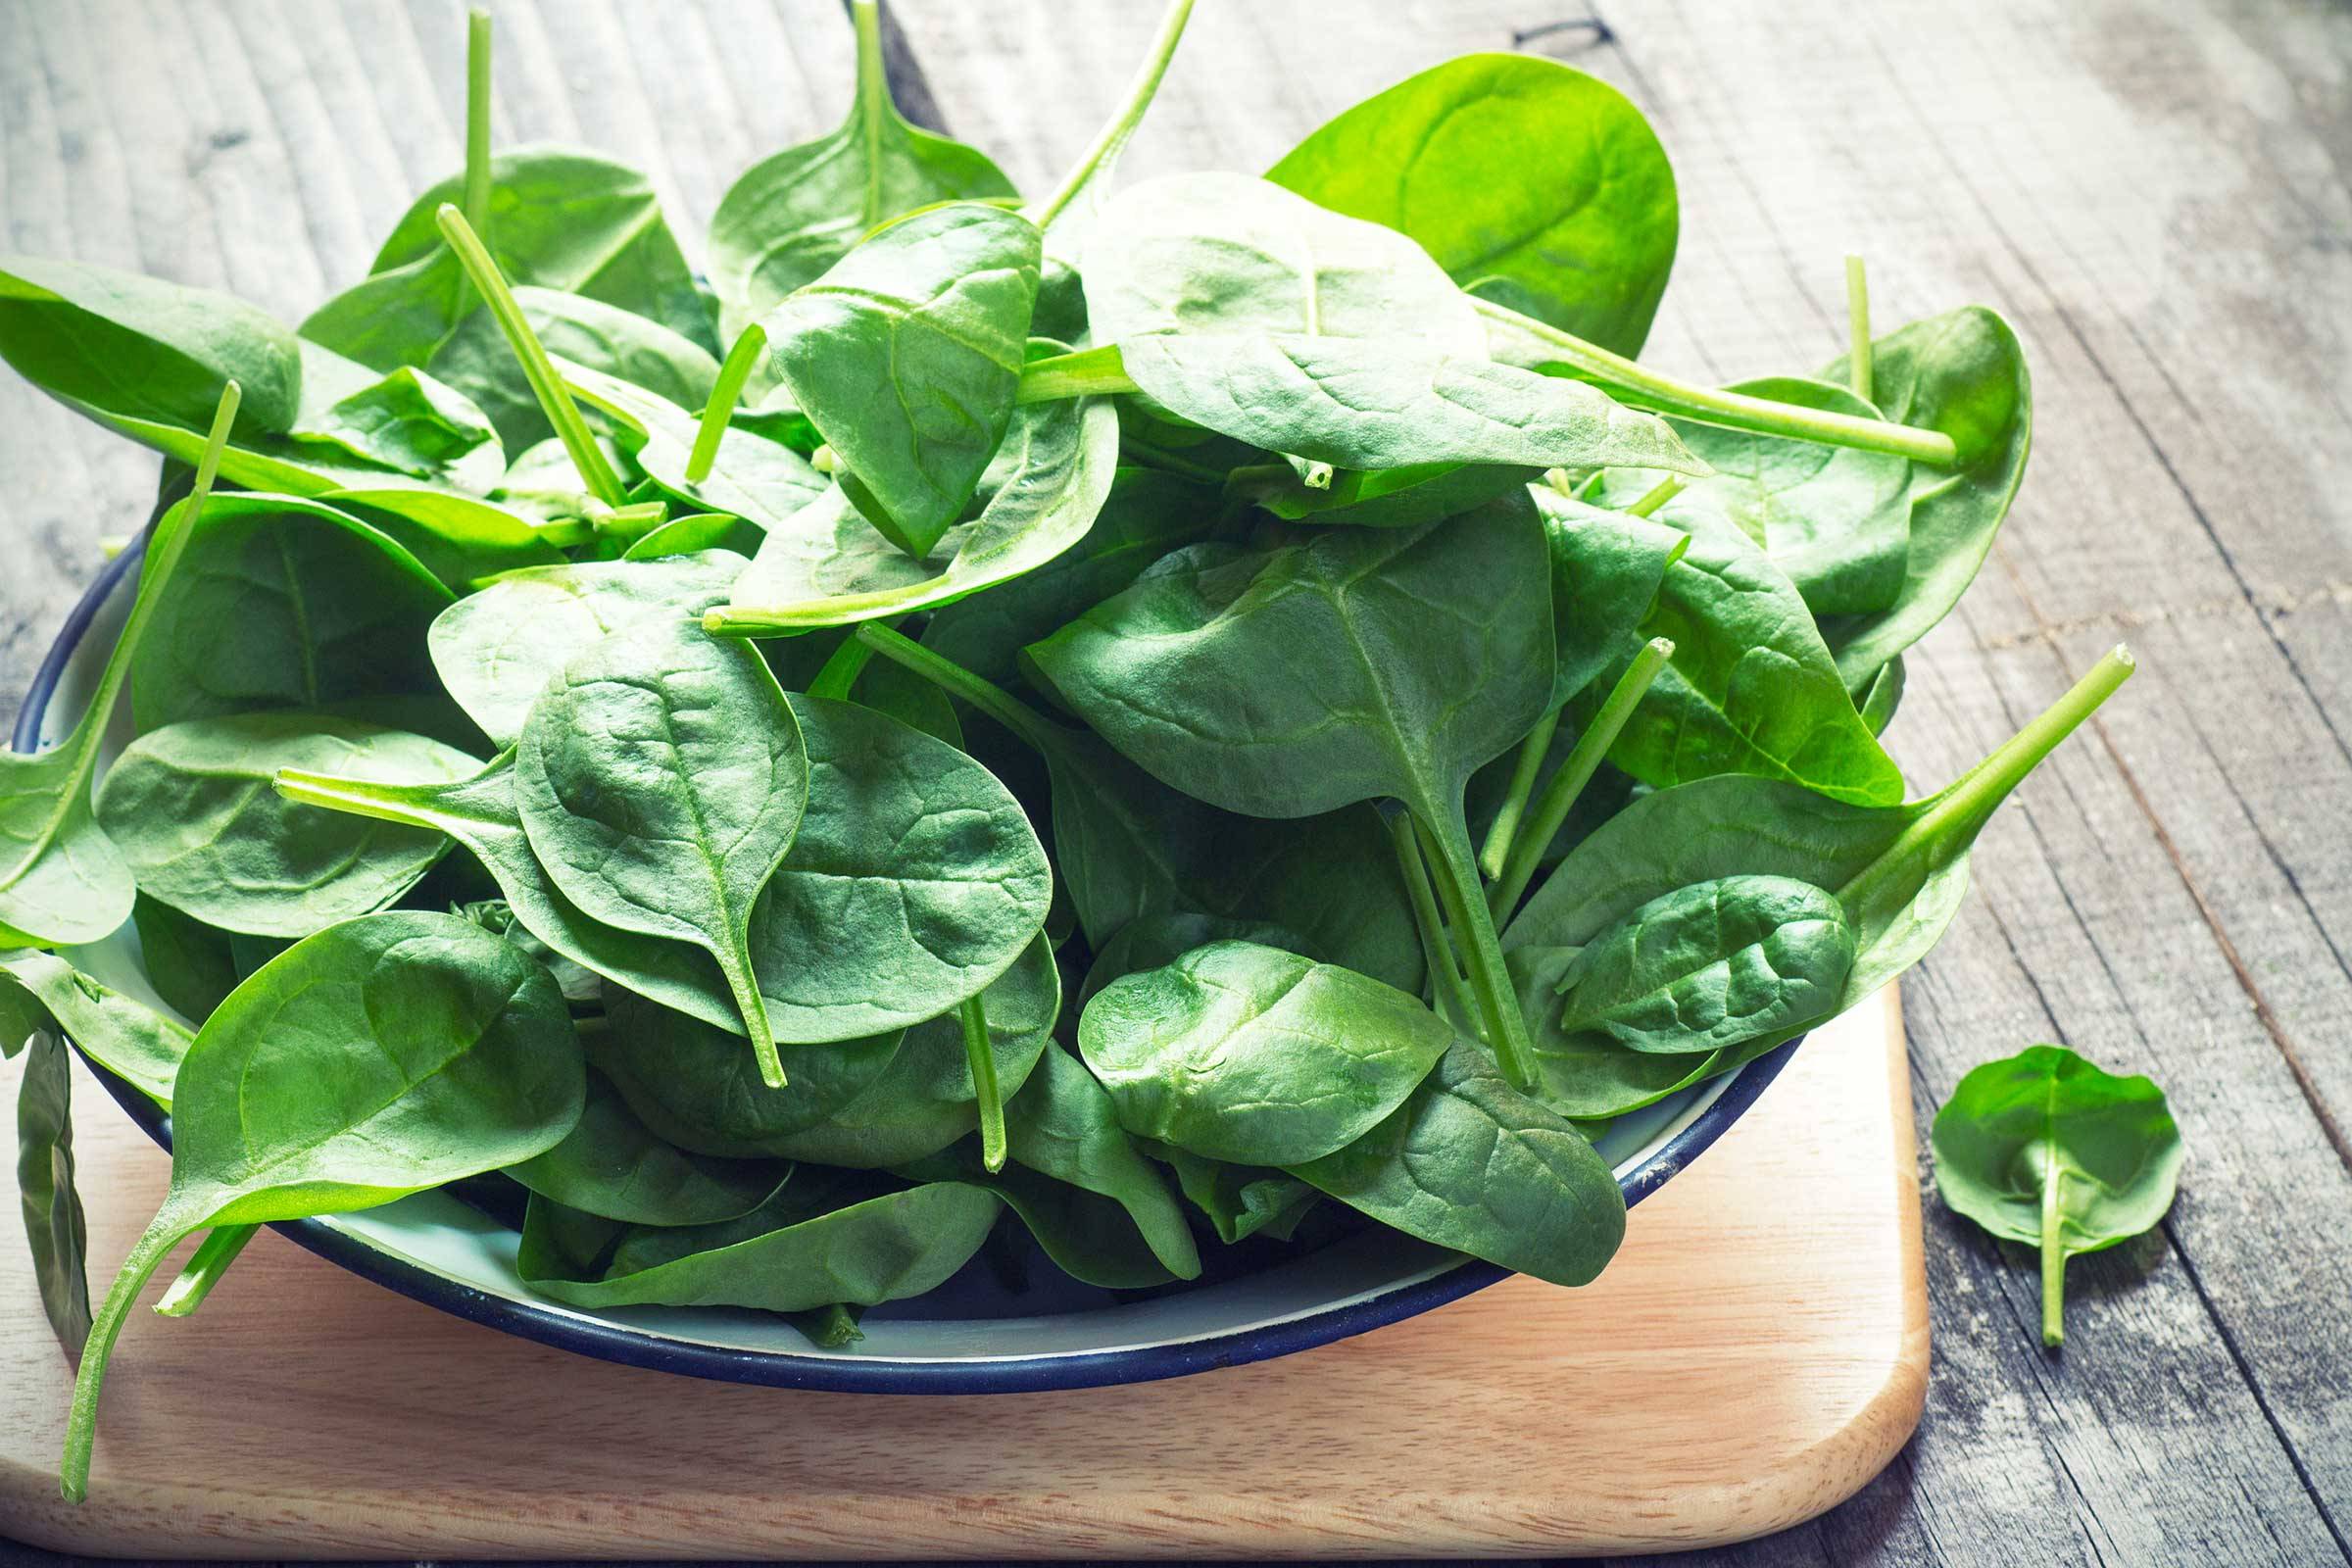 09 reasons need popcorn in diet iron spinach Lecic - خواص اسفناج: 10 خاصیت اثبات شده اسفناج برای سلامتی